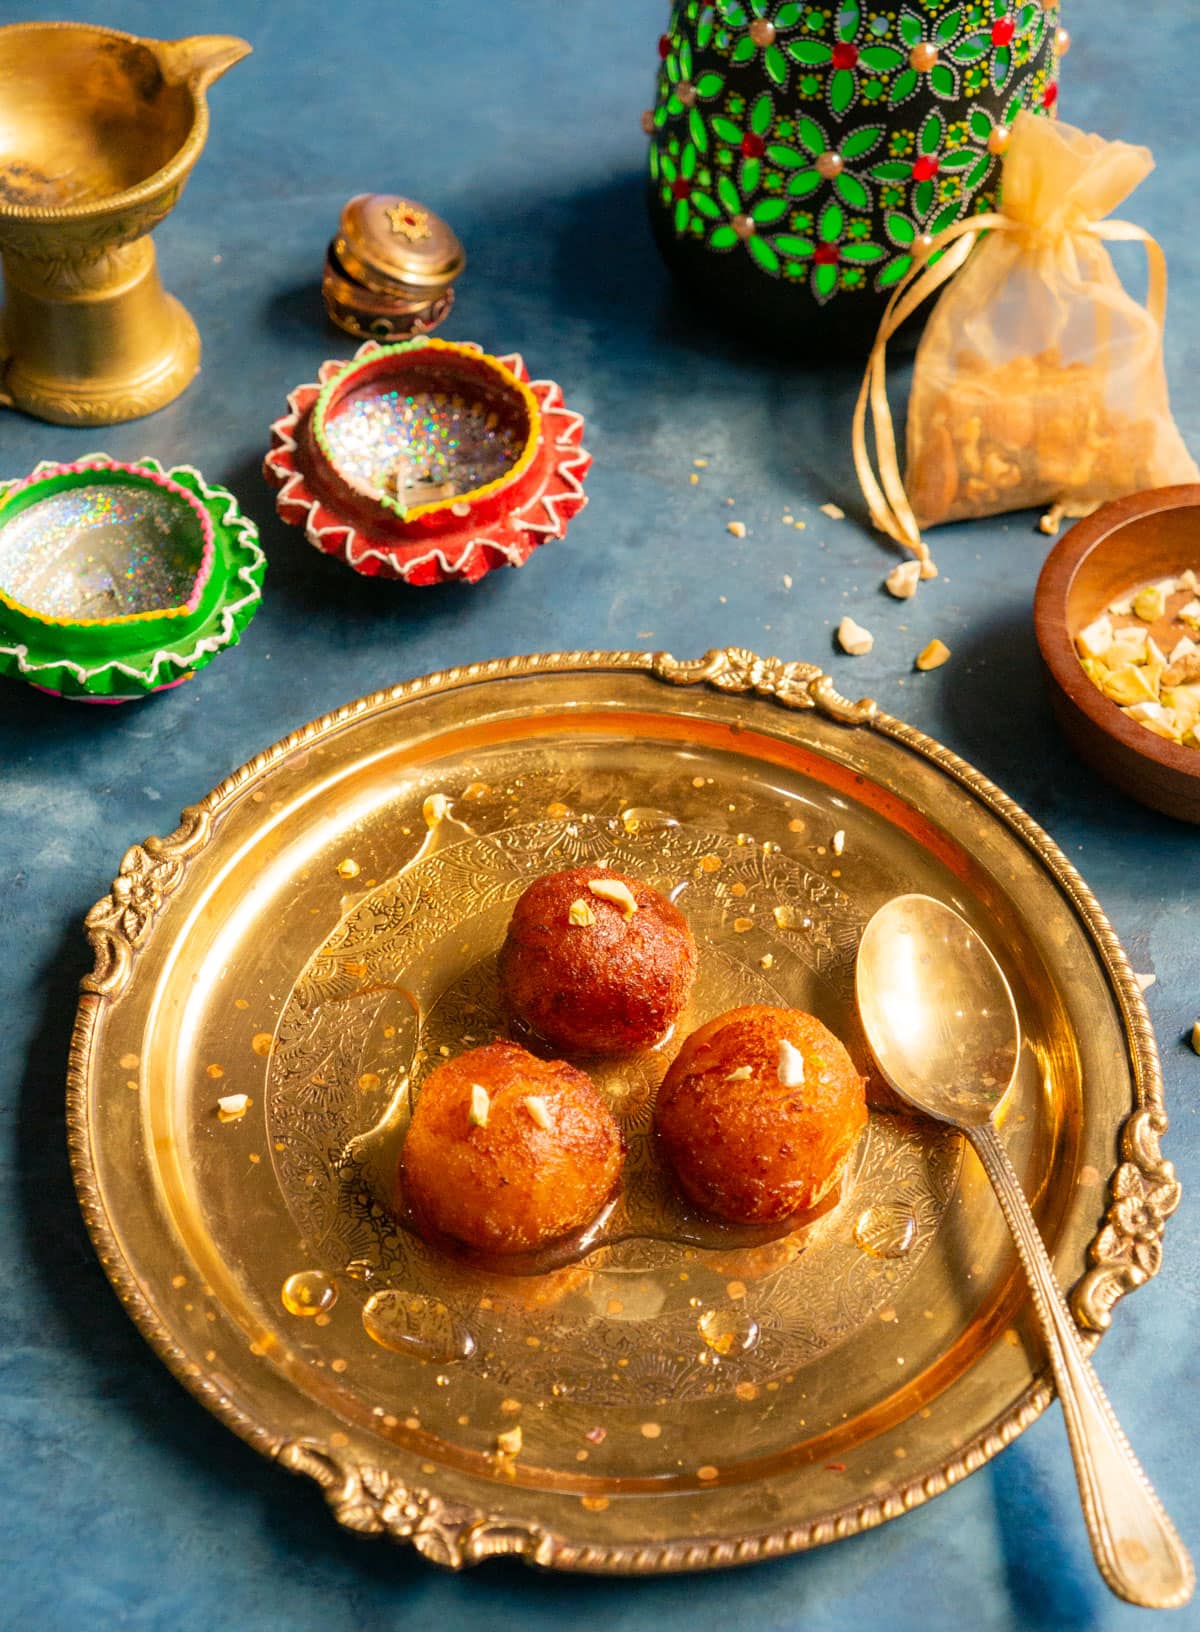 Learn how to make gulab jamun (Indian dessert balls)